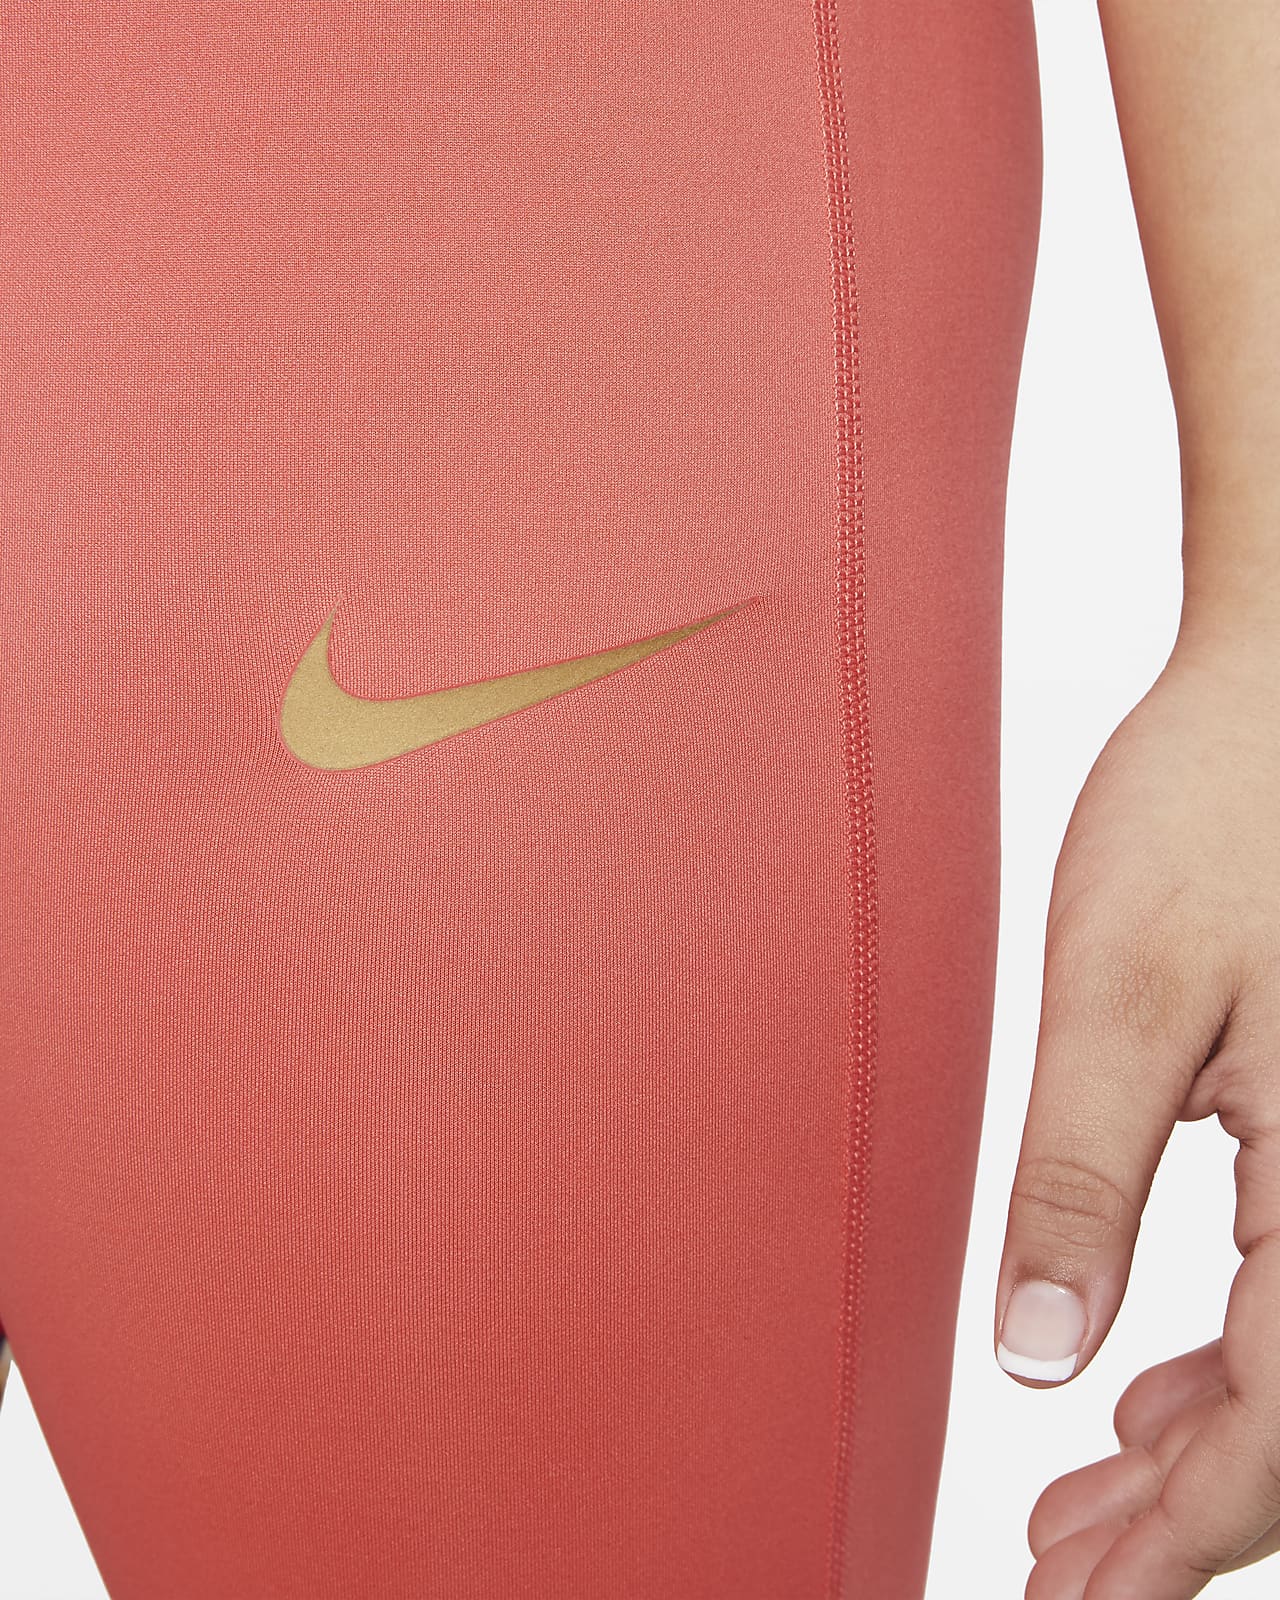 Nike Pro Dri-FIT Older Kids' (Girls') Leggings (Extended Size). Nike LU